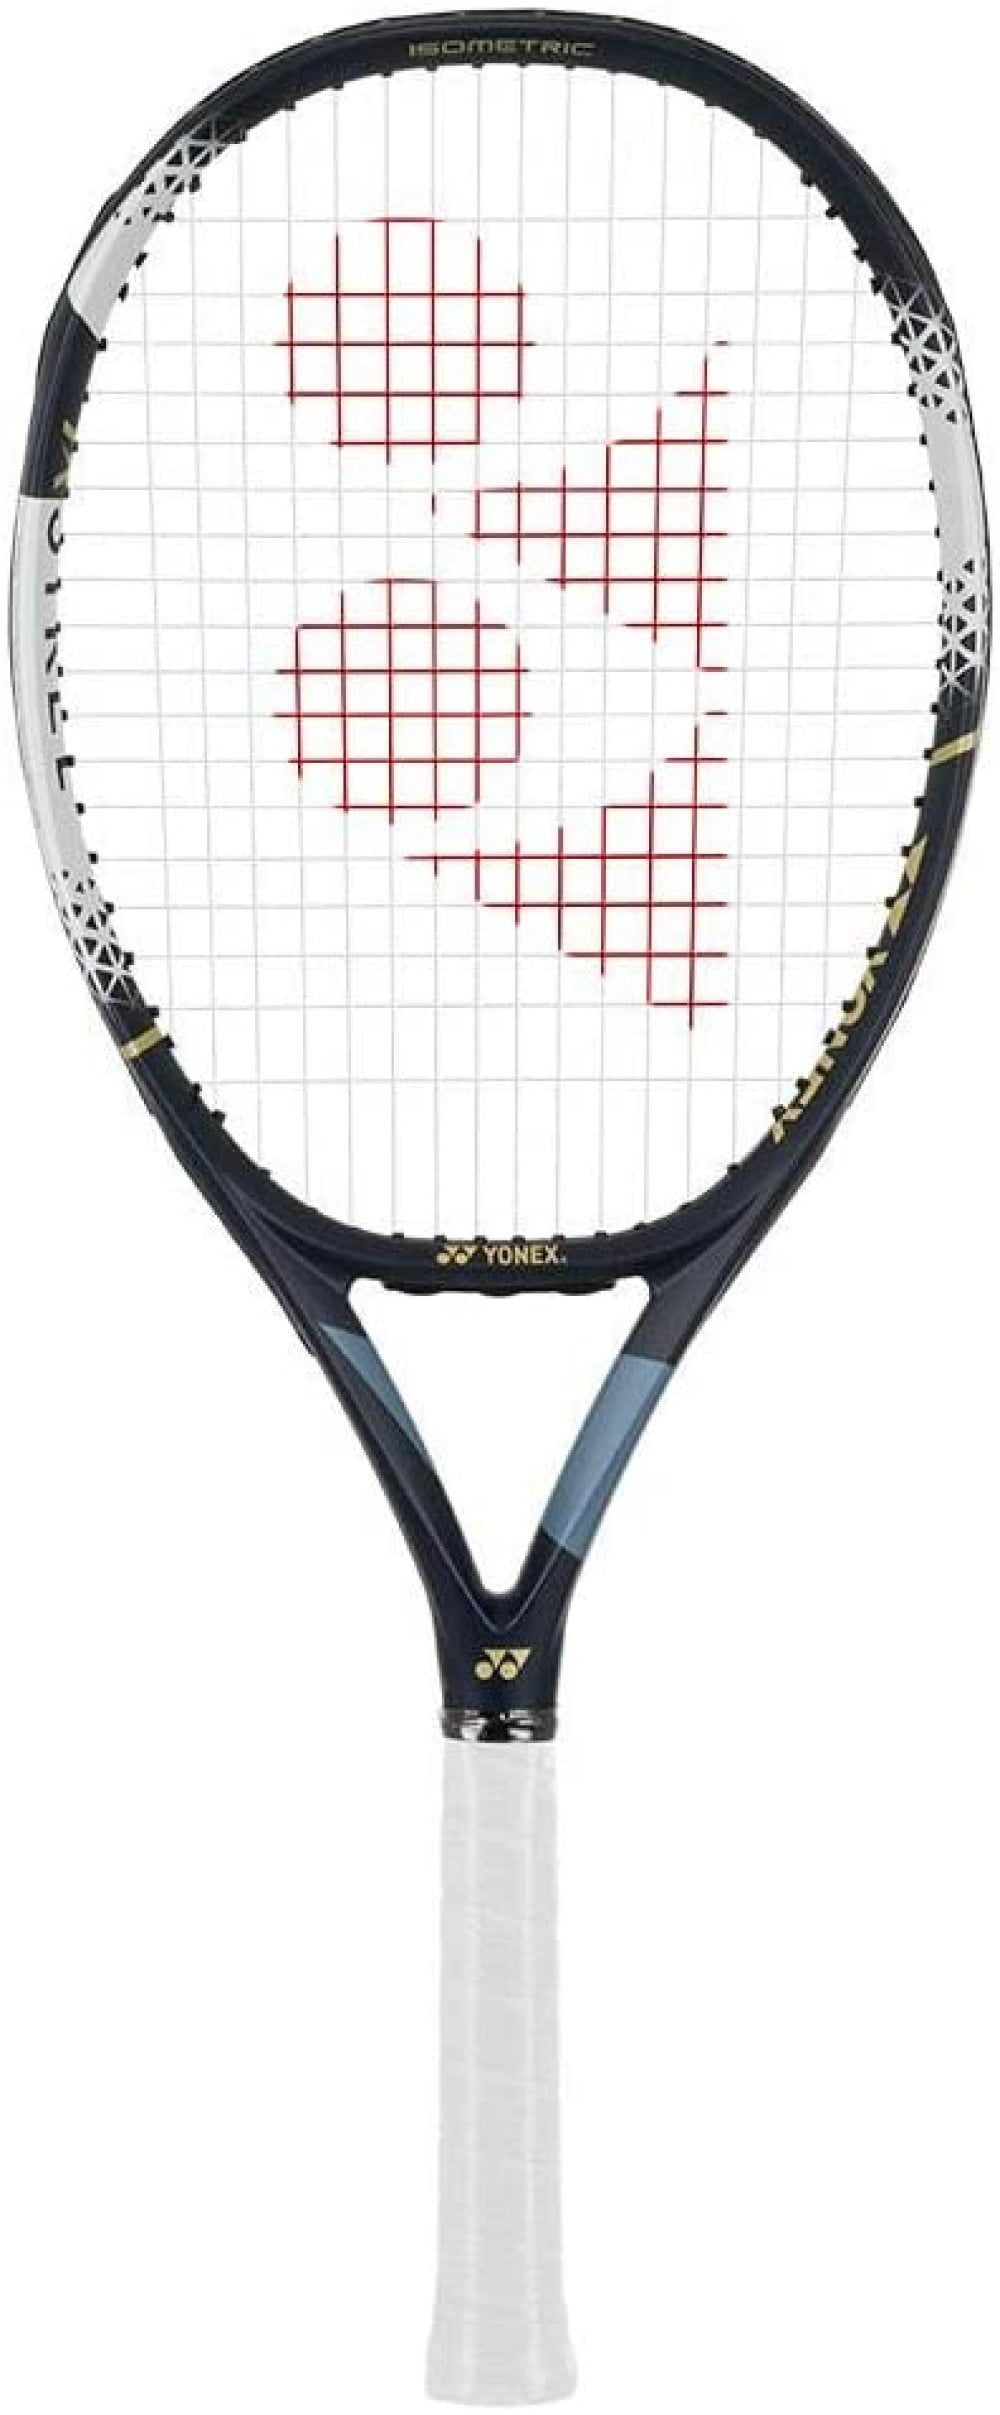 1 Grip Yonex Tennis Squash Badminton Black Racket Grip / Grap 